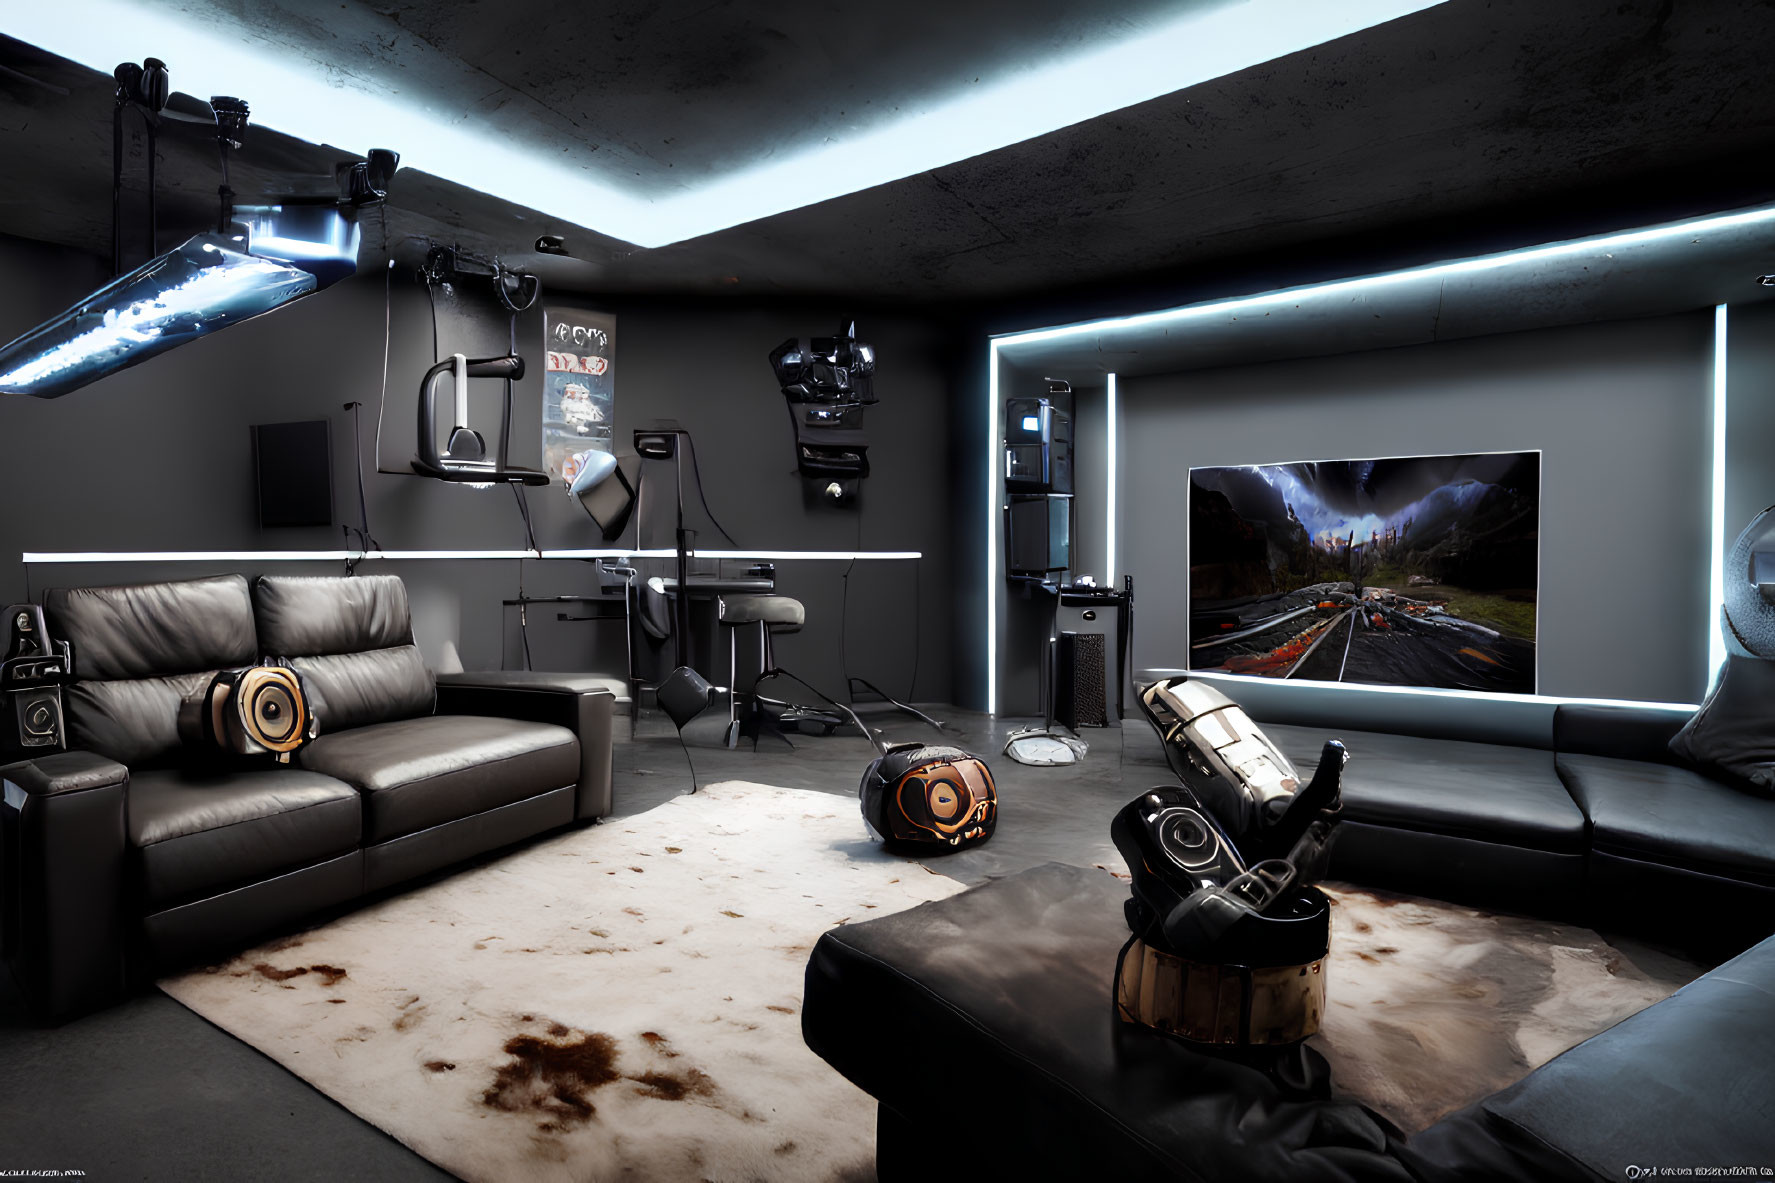 Sleek modern gaming room with dark tones and advanced equipment